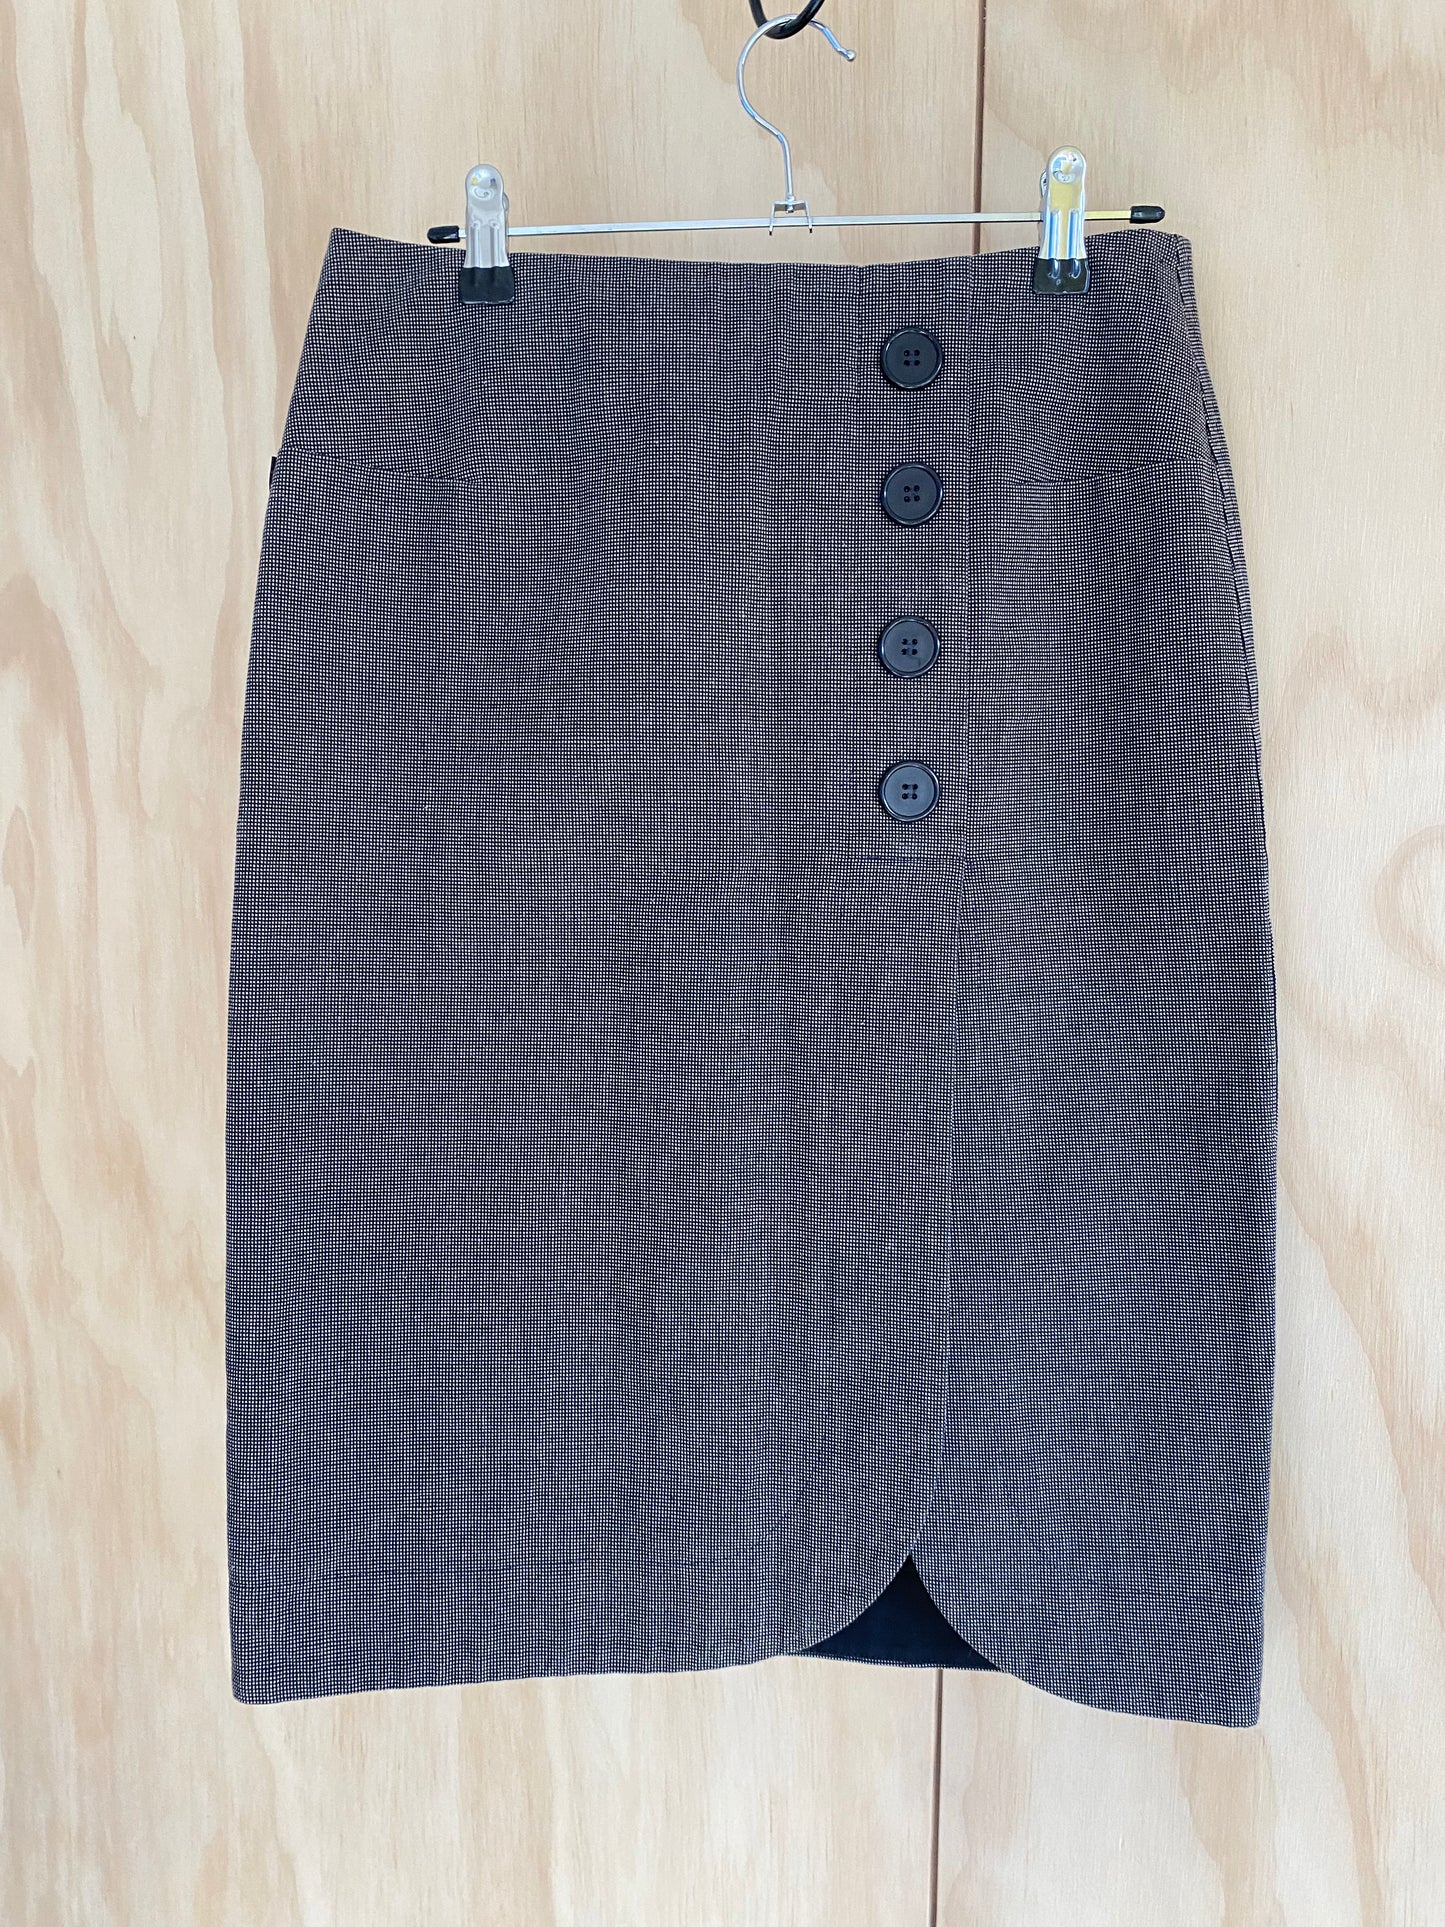 WORLD - Tan & Black Small Check Knee Length Skirt - Size XS